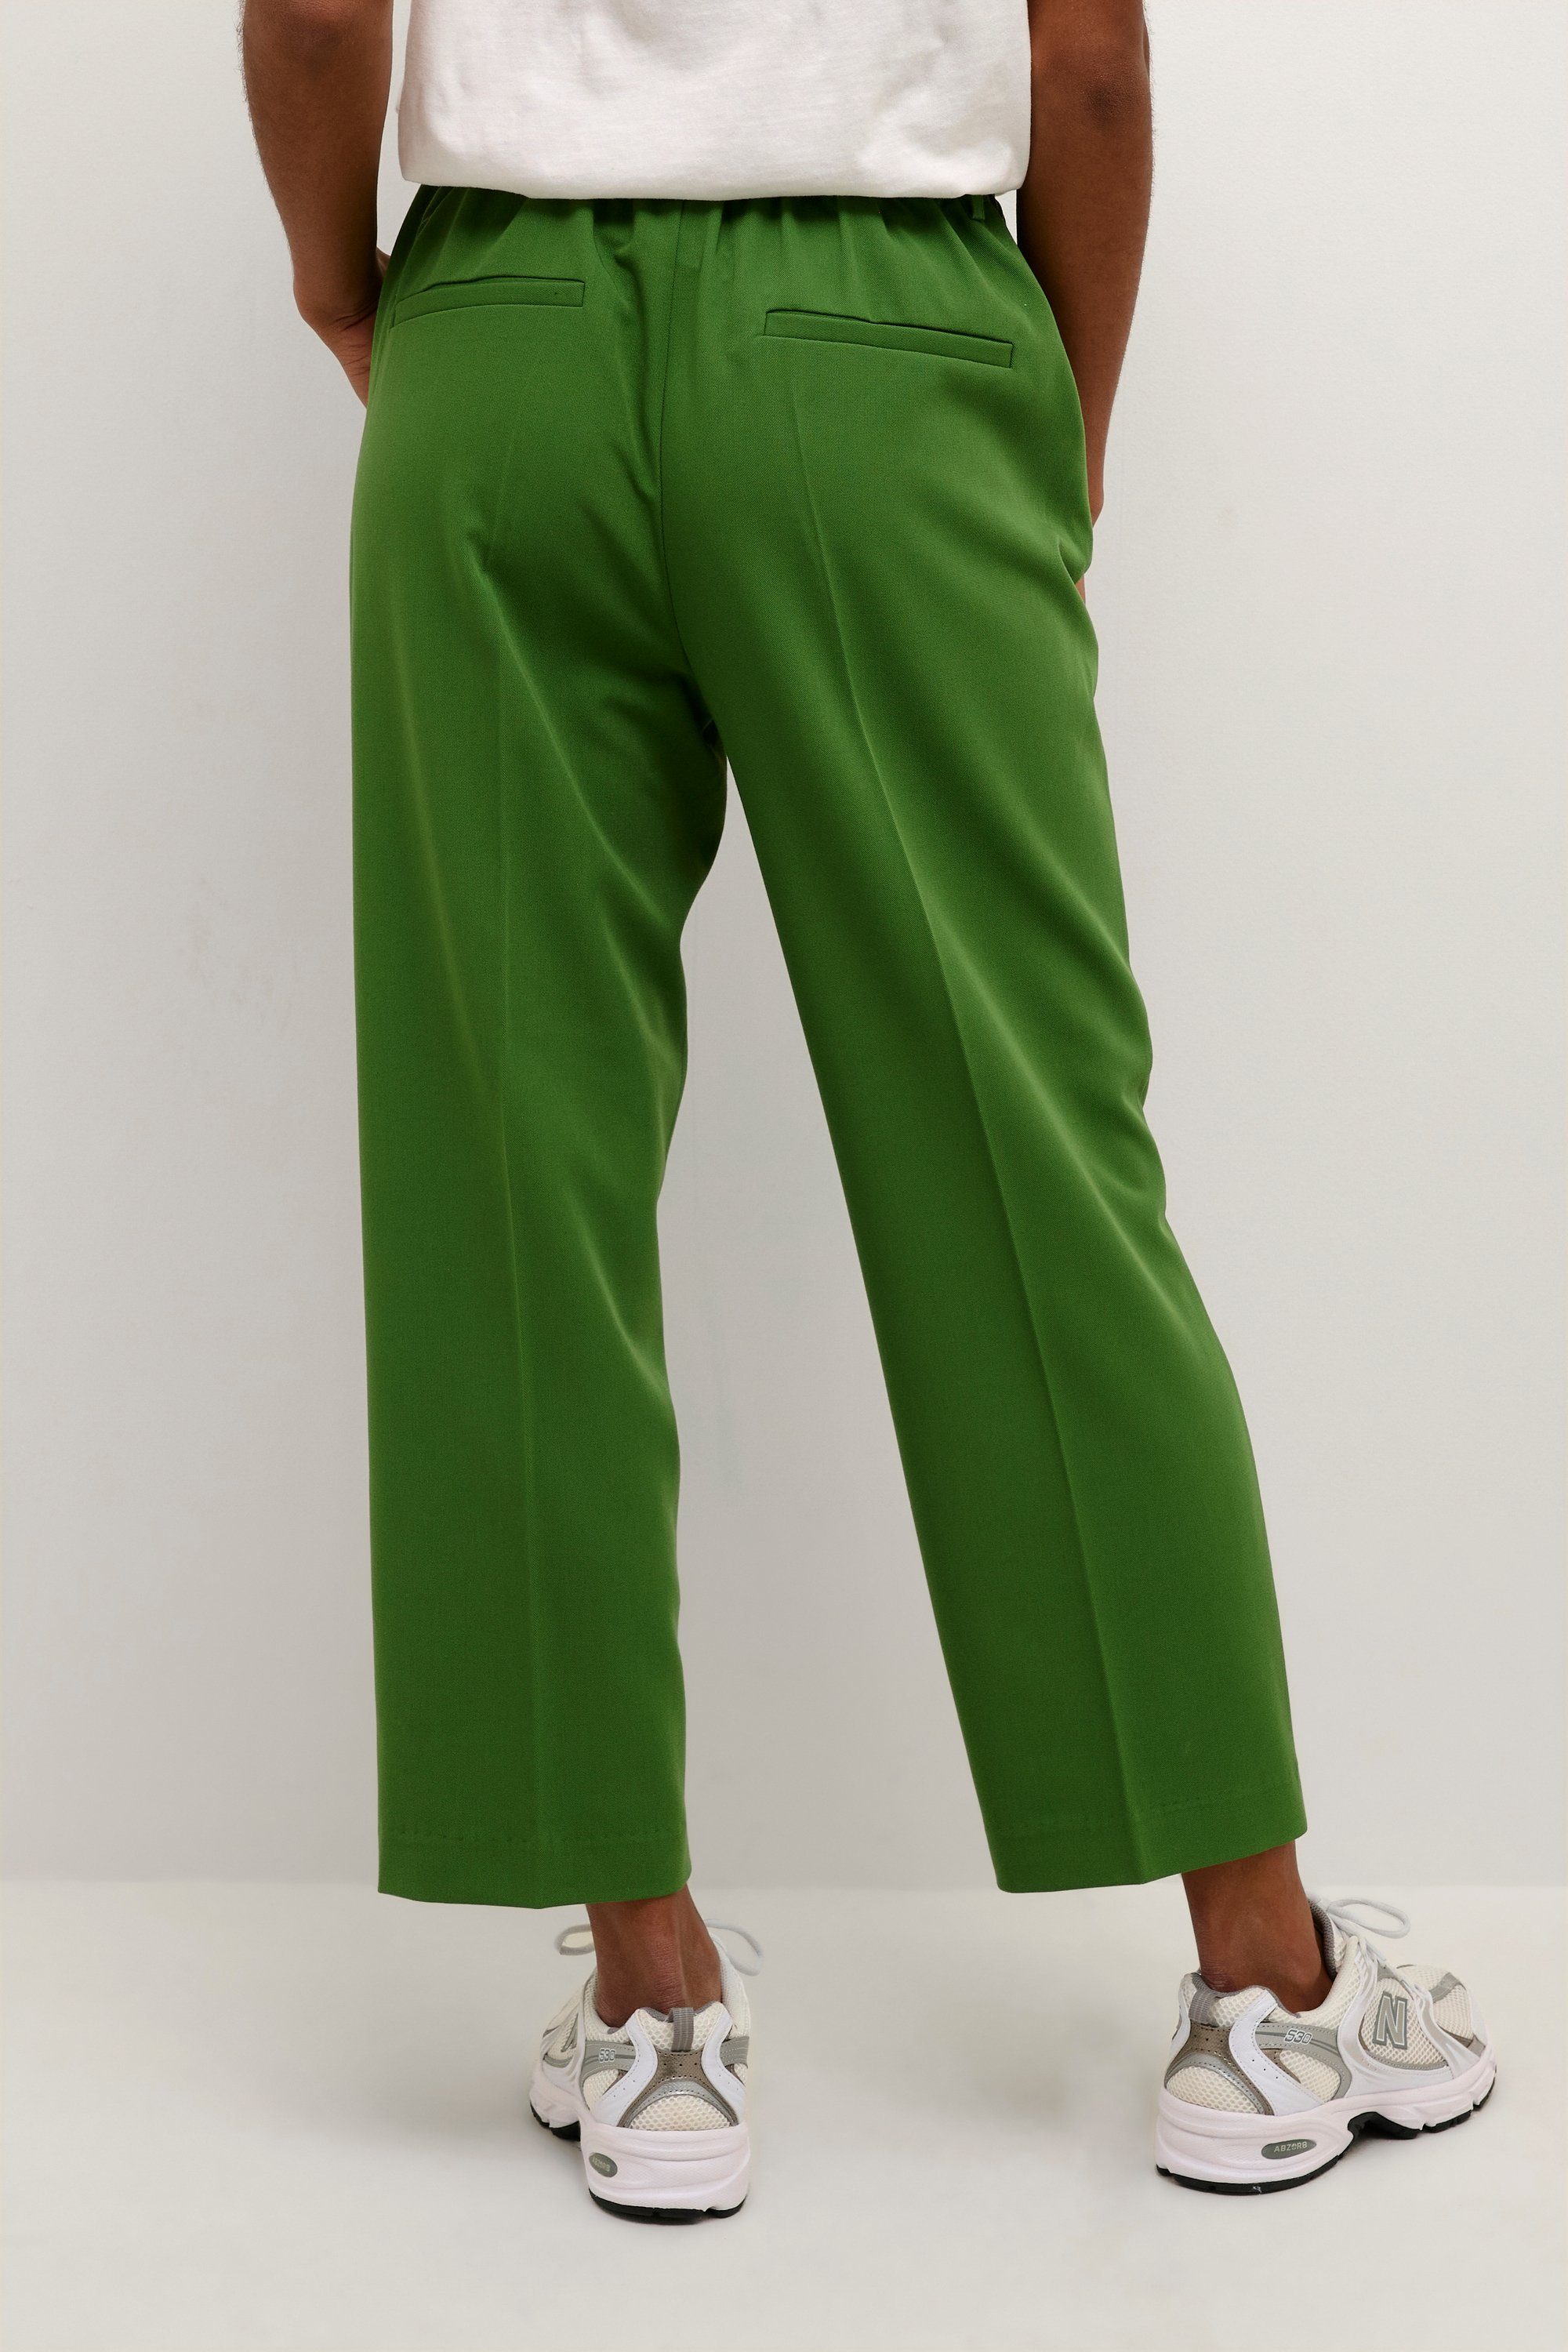 Suiting Artichoke KAFFE Green Pants Anzughose KAsakura